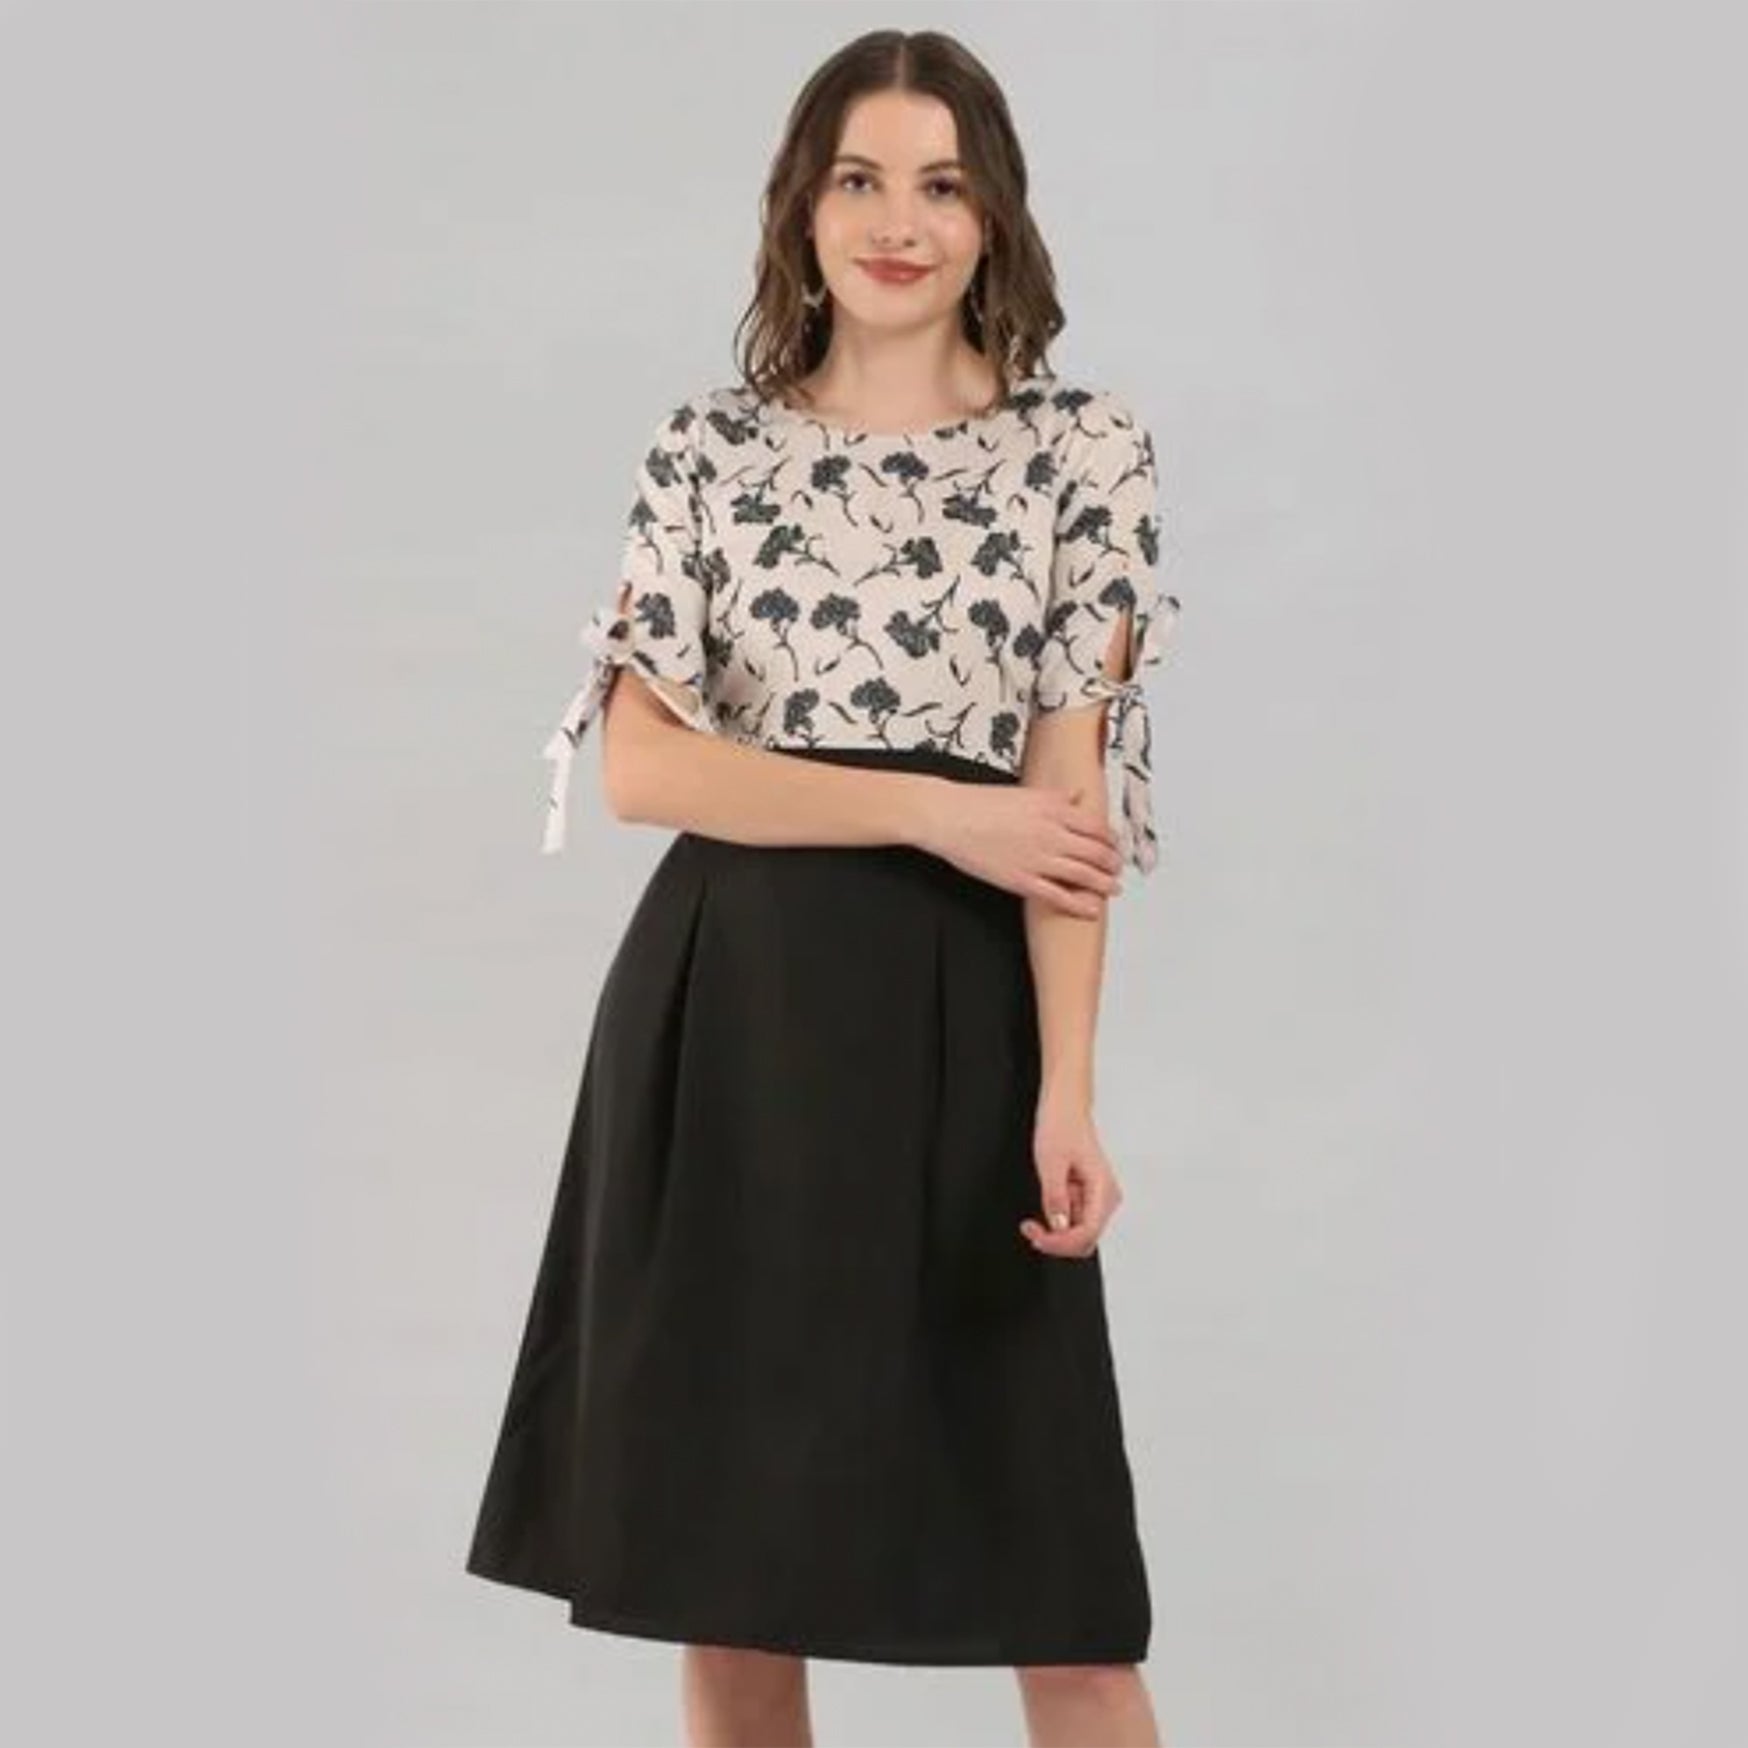 SELVIA Beige & Black Floral Print A-Line Dress